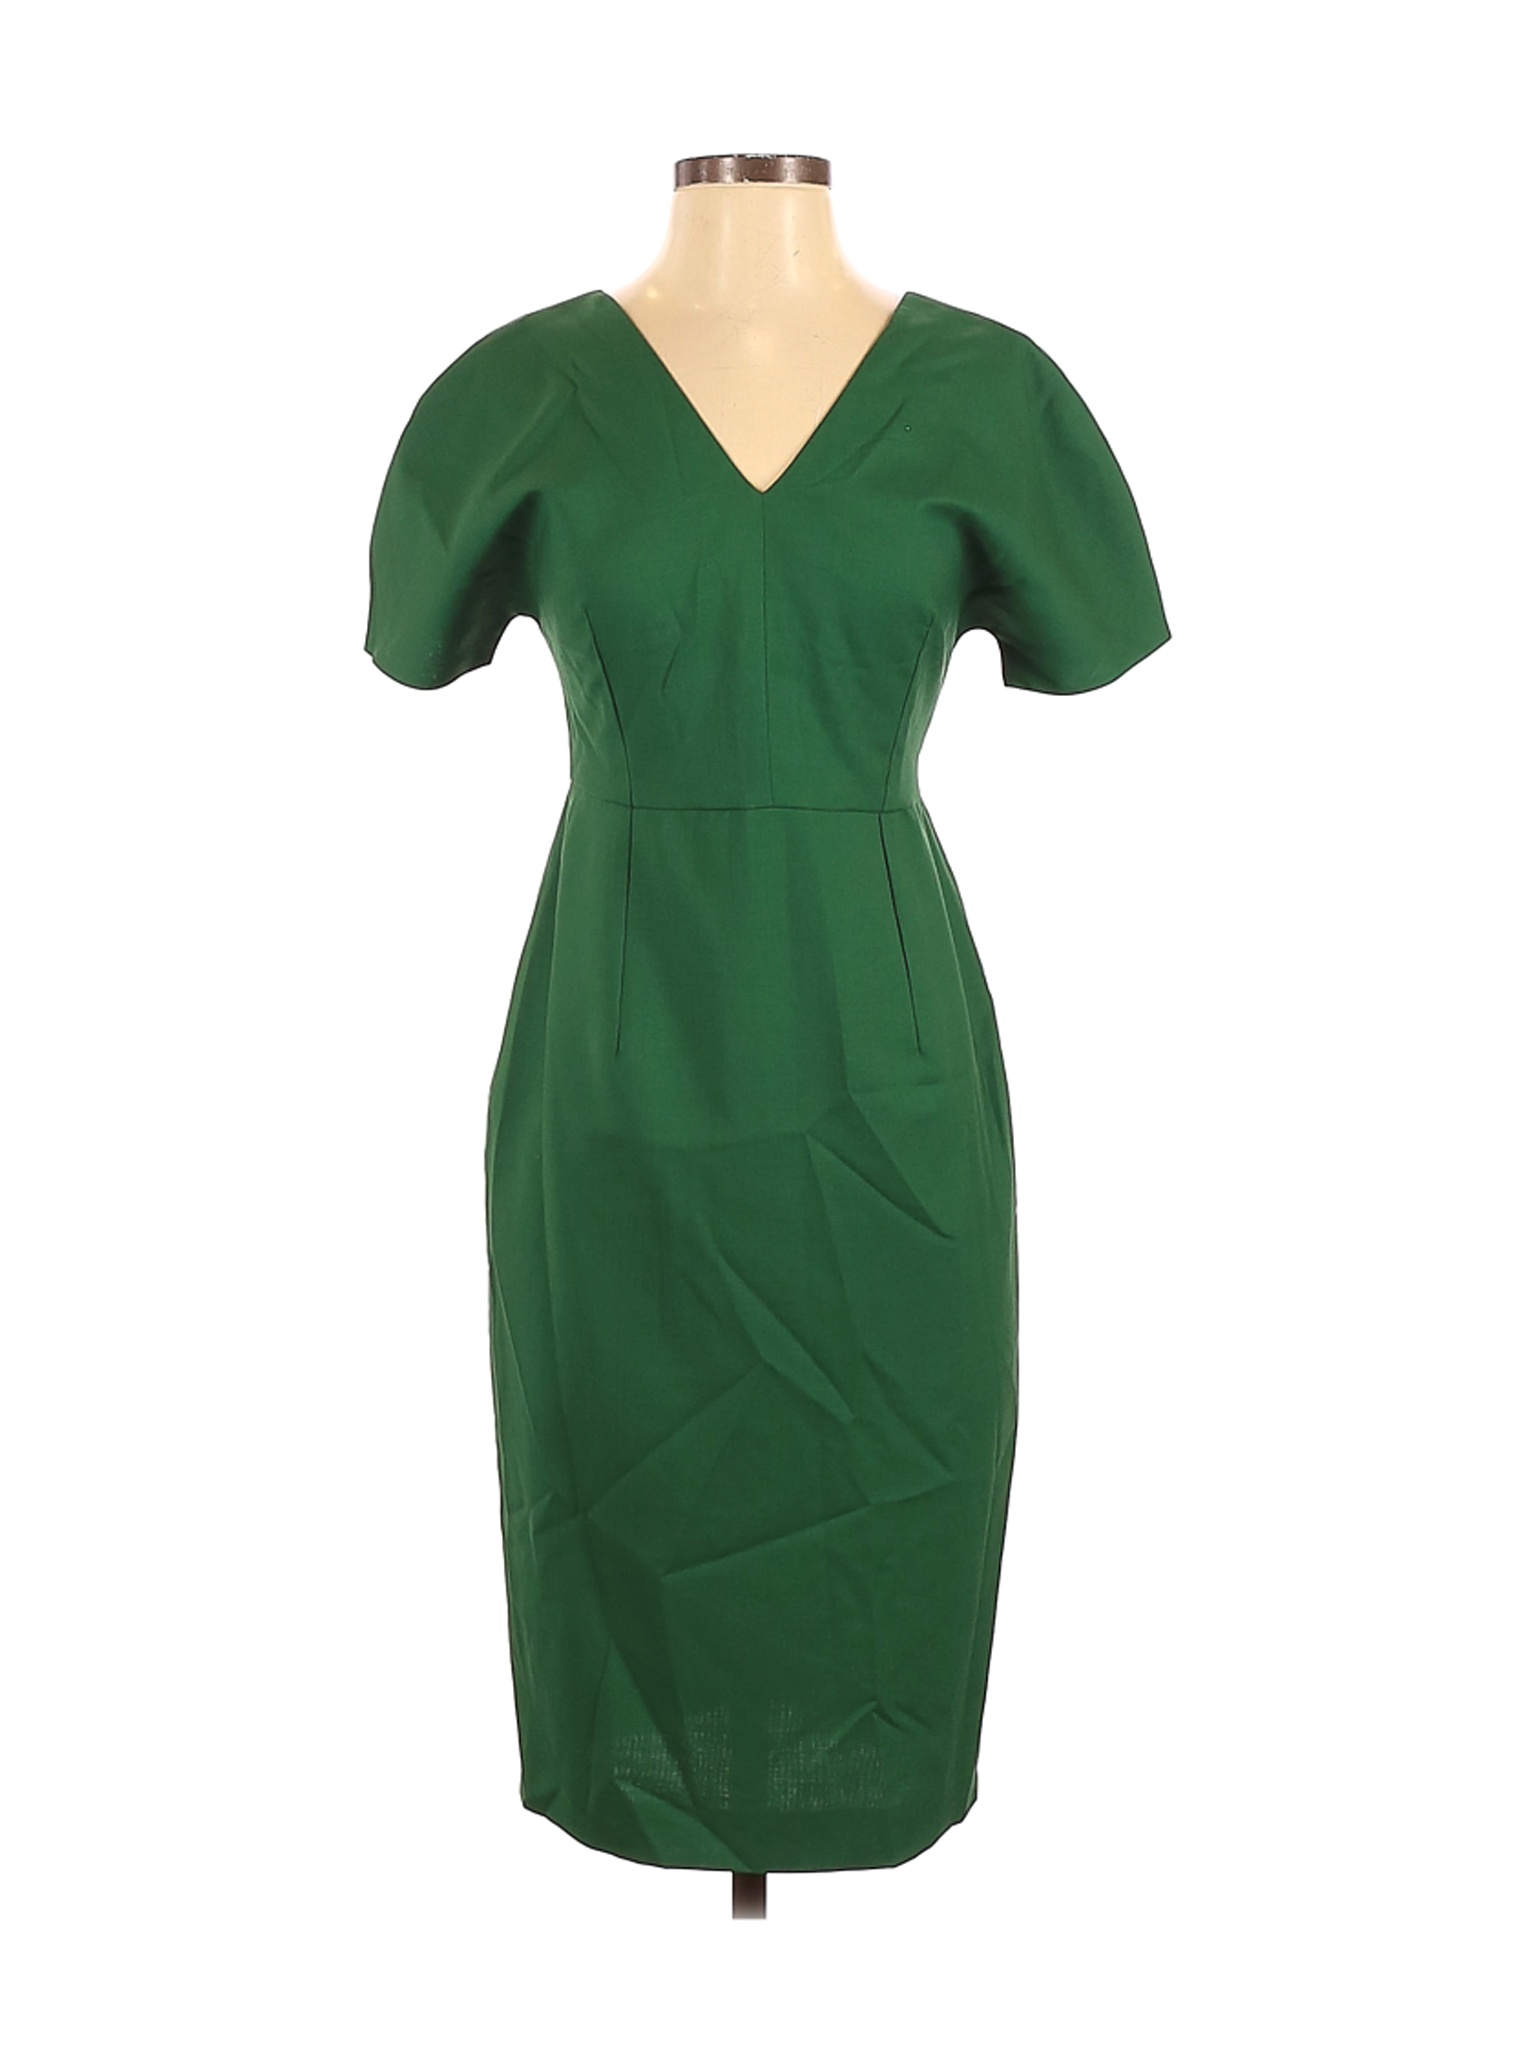 NWT Jil Sander Women Green Casual Dress 34 french | eBay